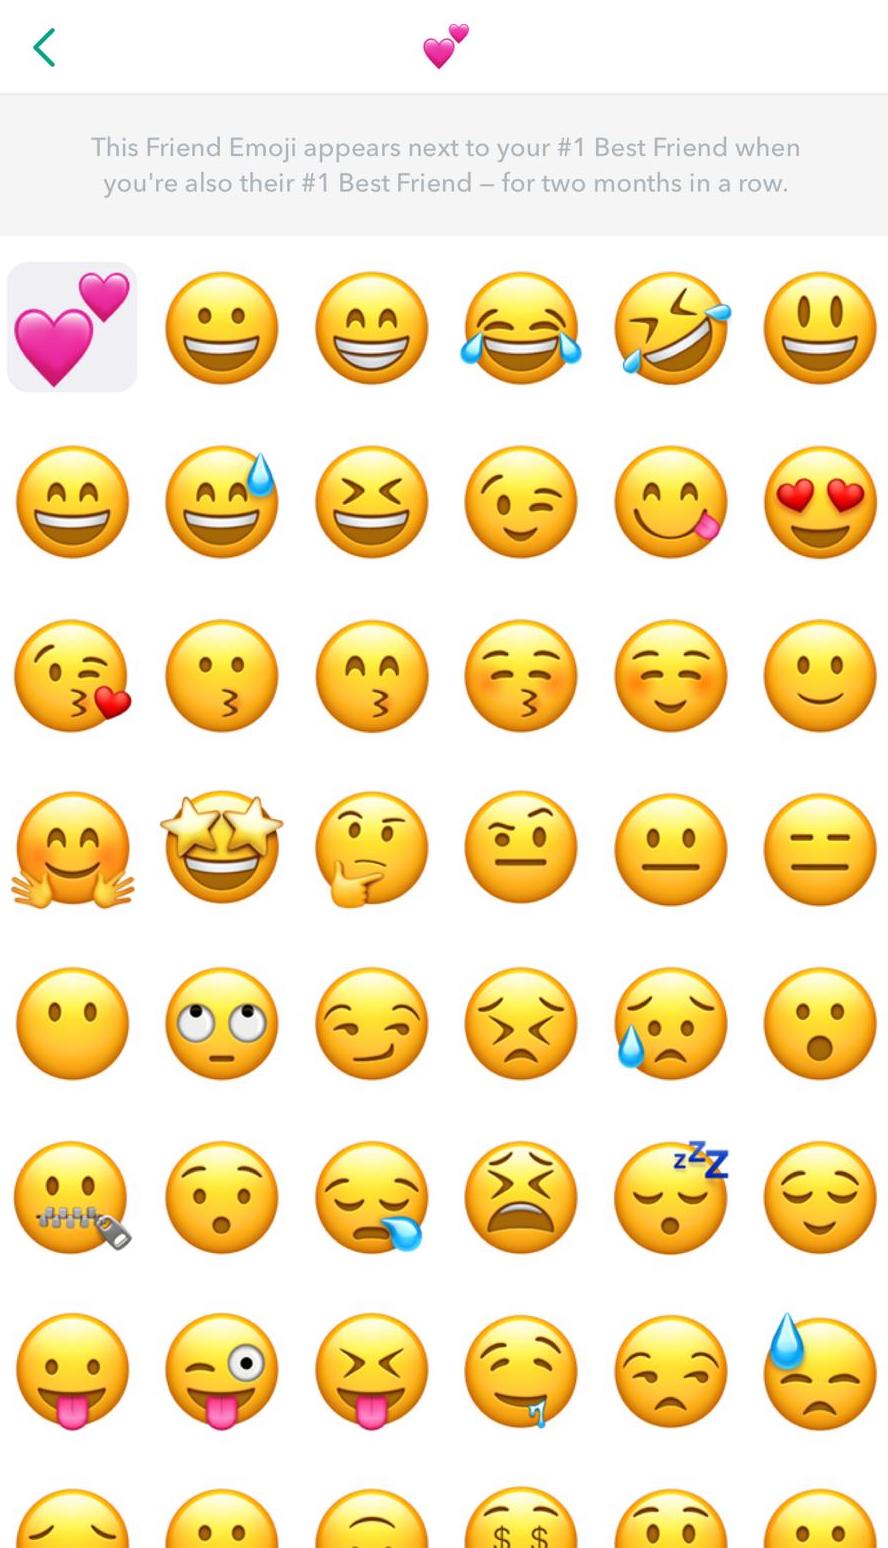 Personnaliser les emojis de Snapchat